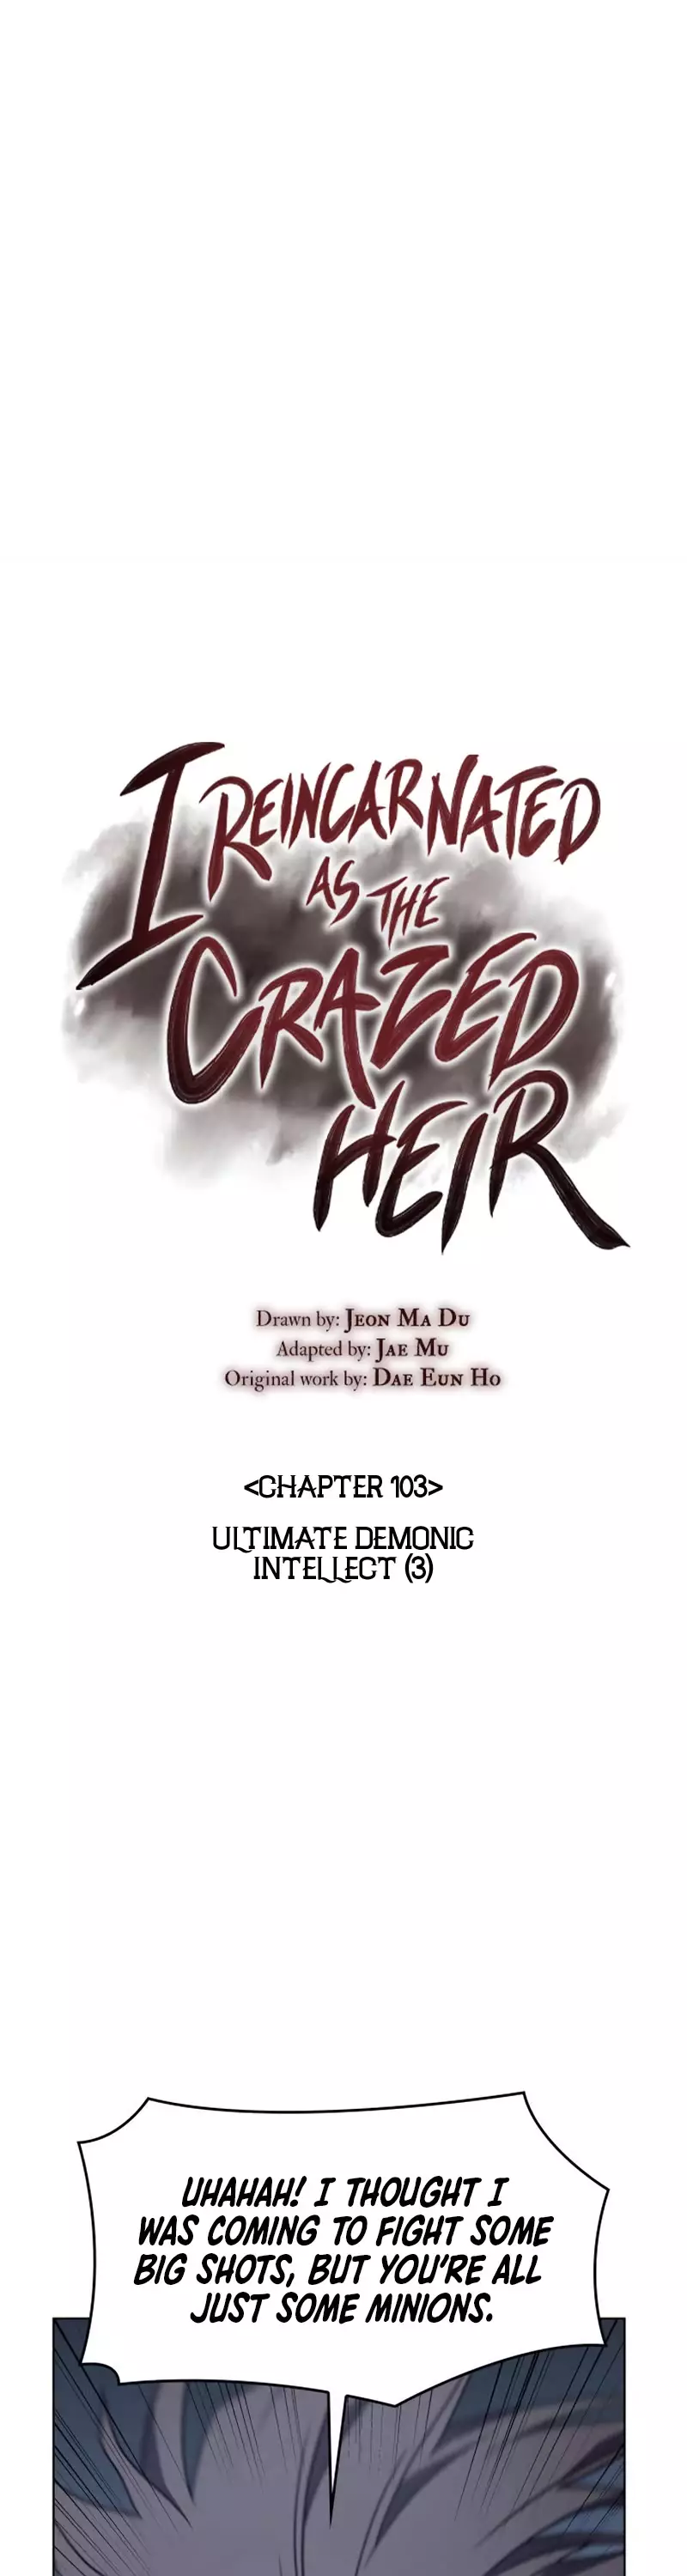 I Reincarnated As The Crazed Heir - 103 page 16-806e33d0